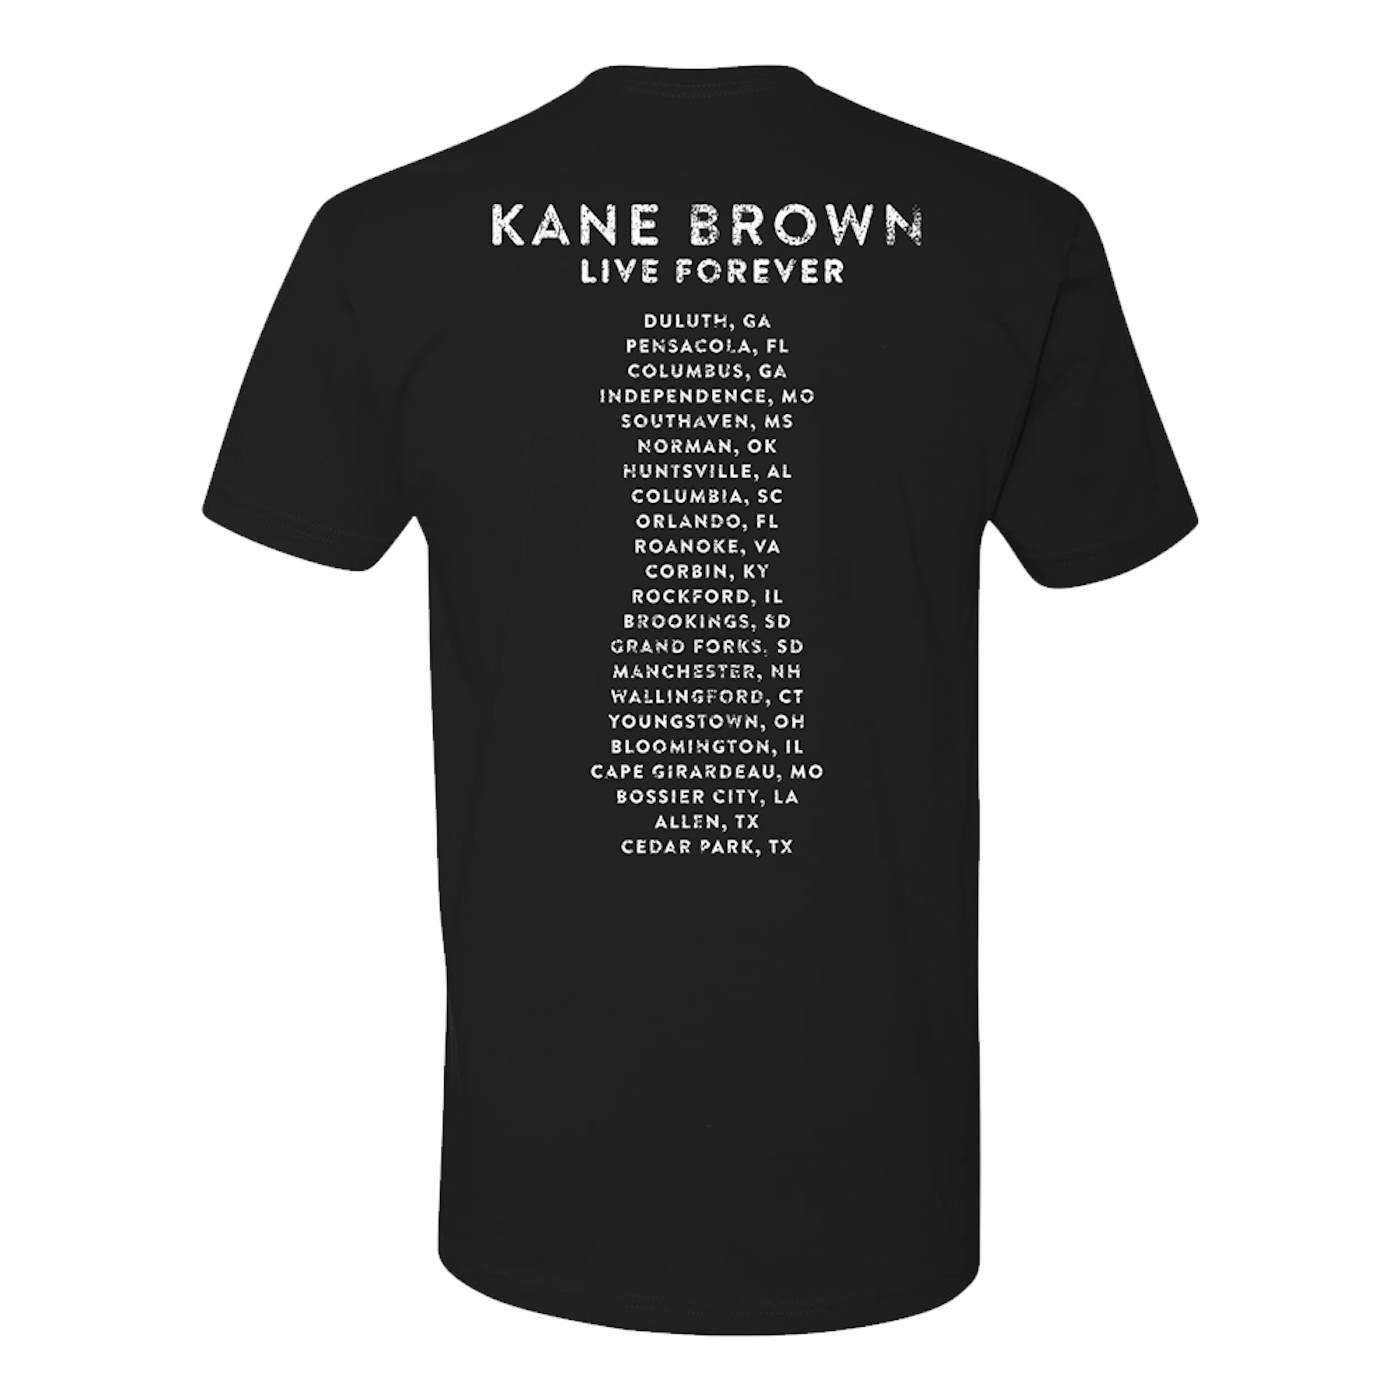 Kane Brown Live Forever Tour Tee